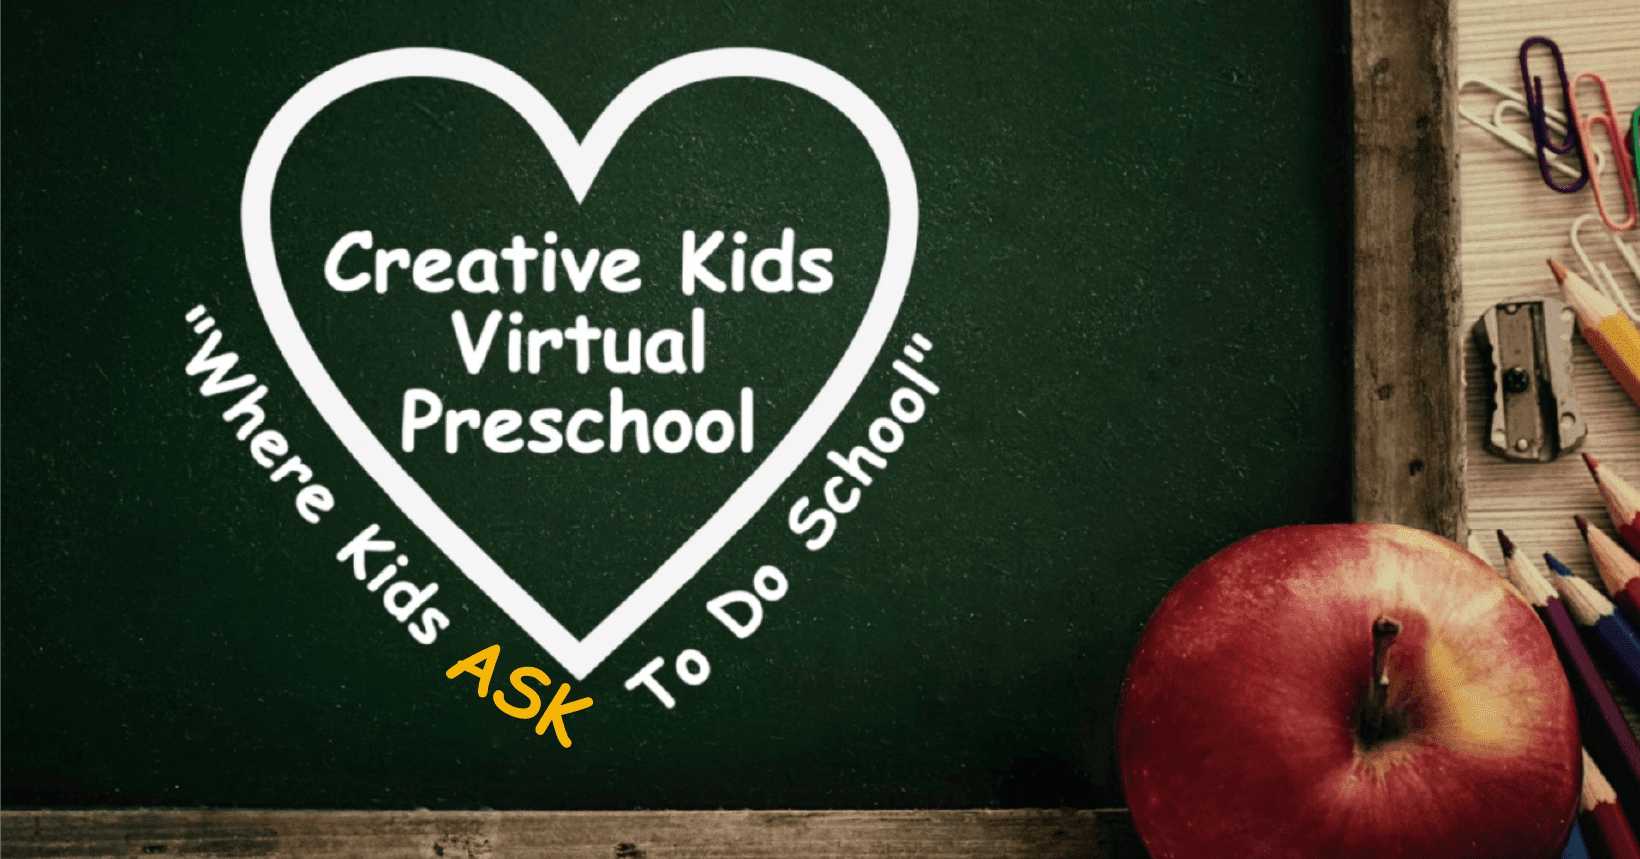 Our Creative Kids Virtual Preschool - Free